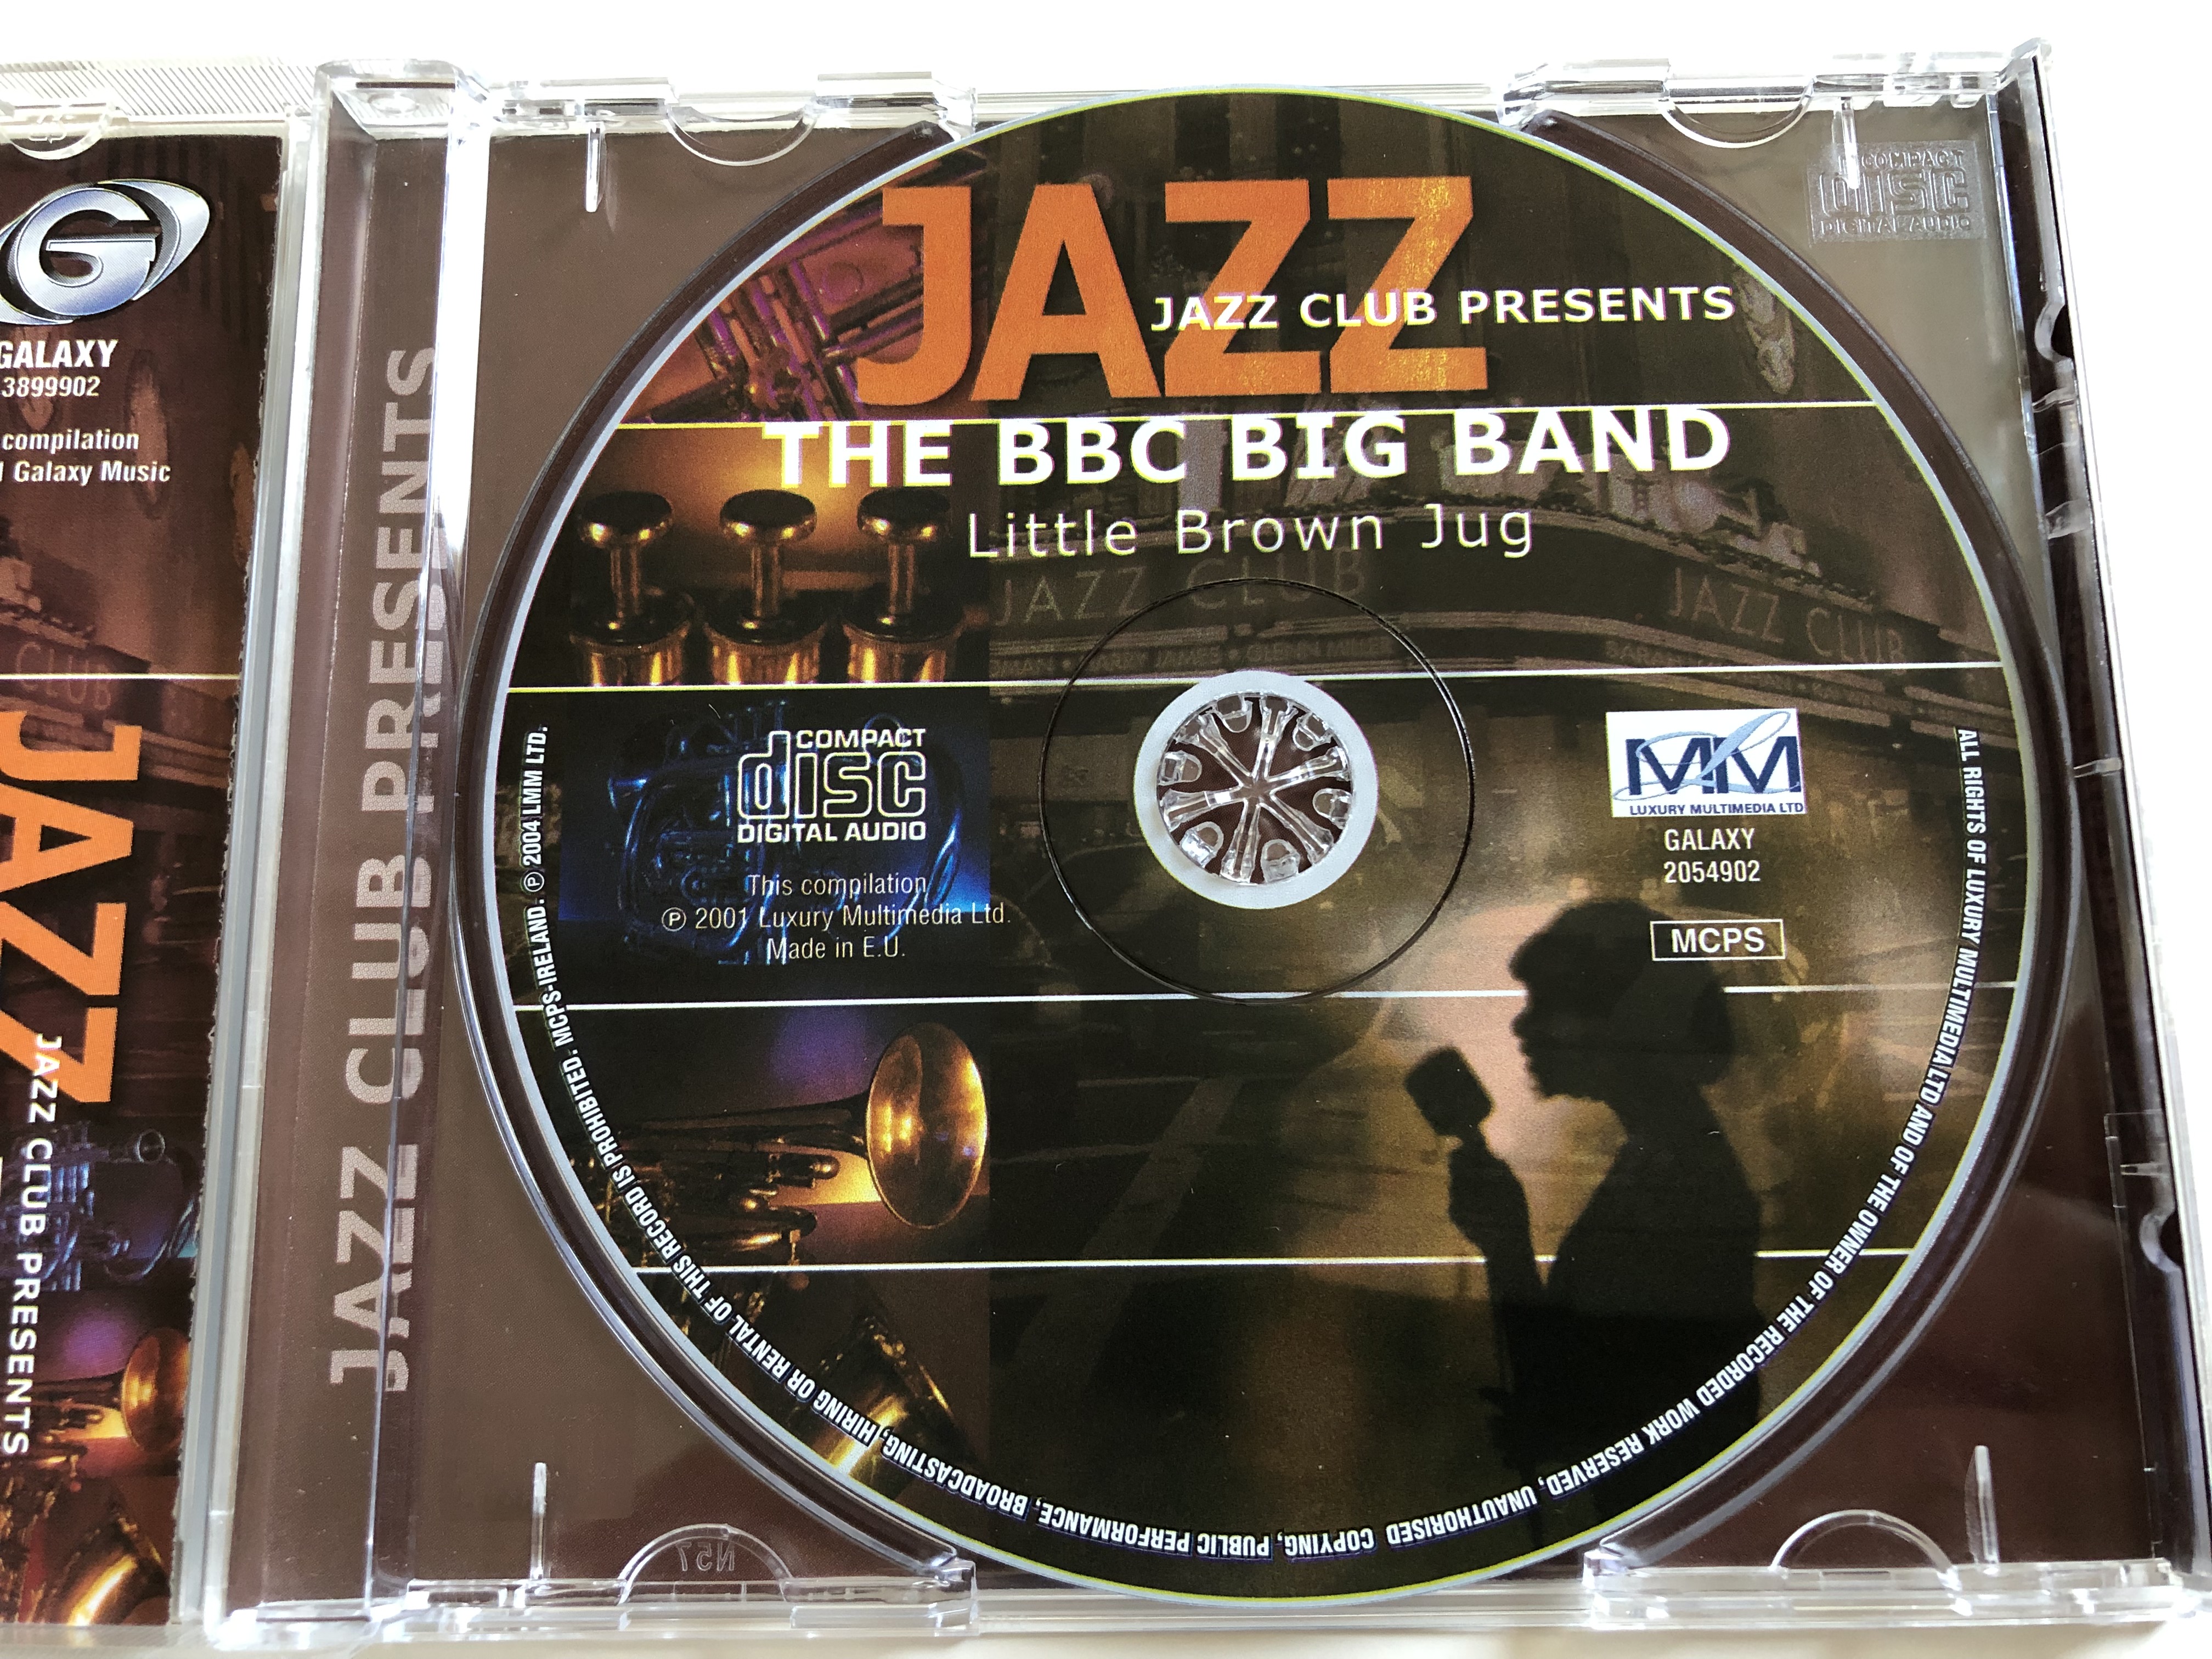 jazz-club-presents-the-bbc-big-band-little-brown-jug-galaxy-music-audio-cd-2001-3899902-3-.jpg